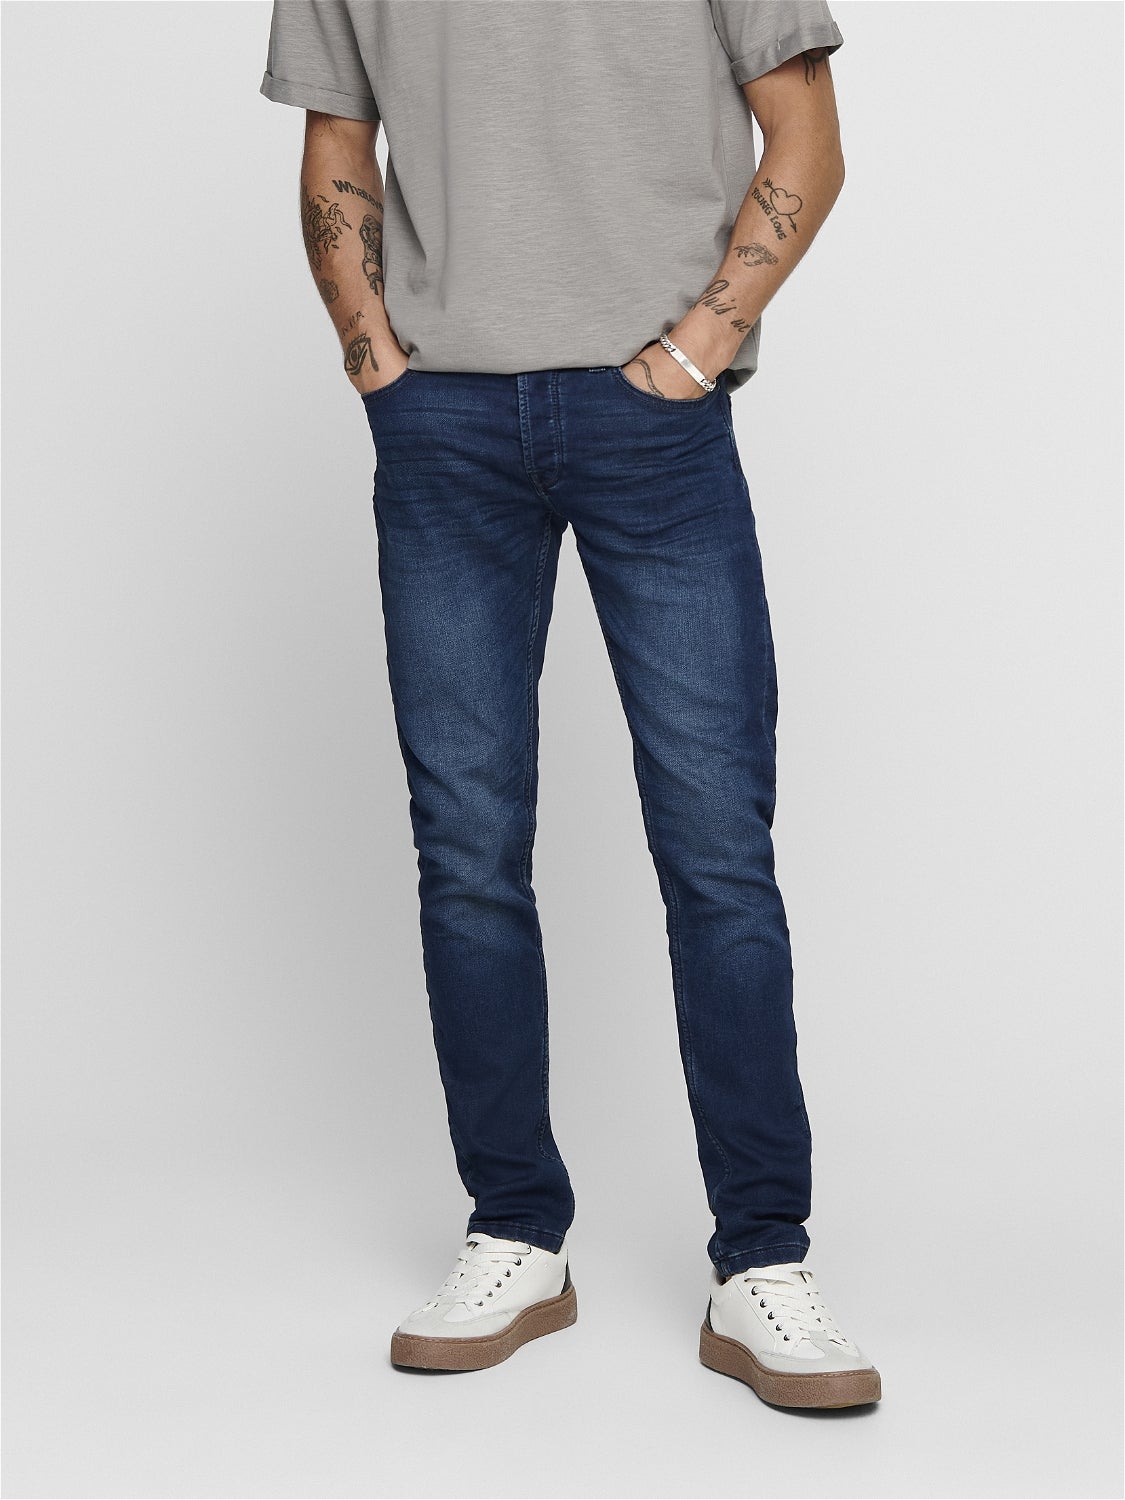 ONLY & SONS capri jeans Navy Blue MEN FASHION Jeans Strech discount 56% 